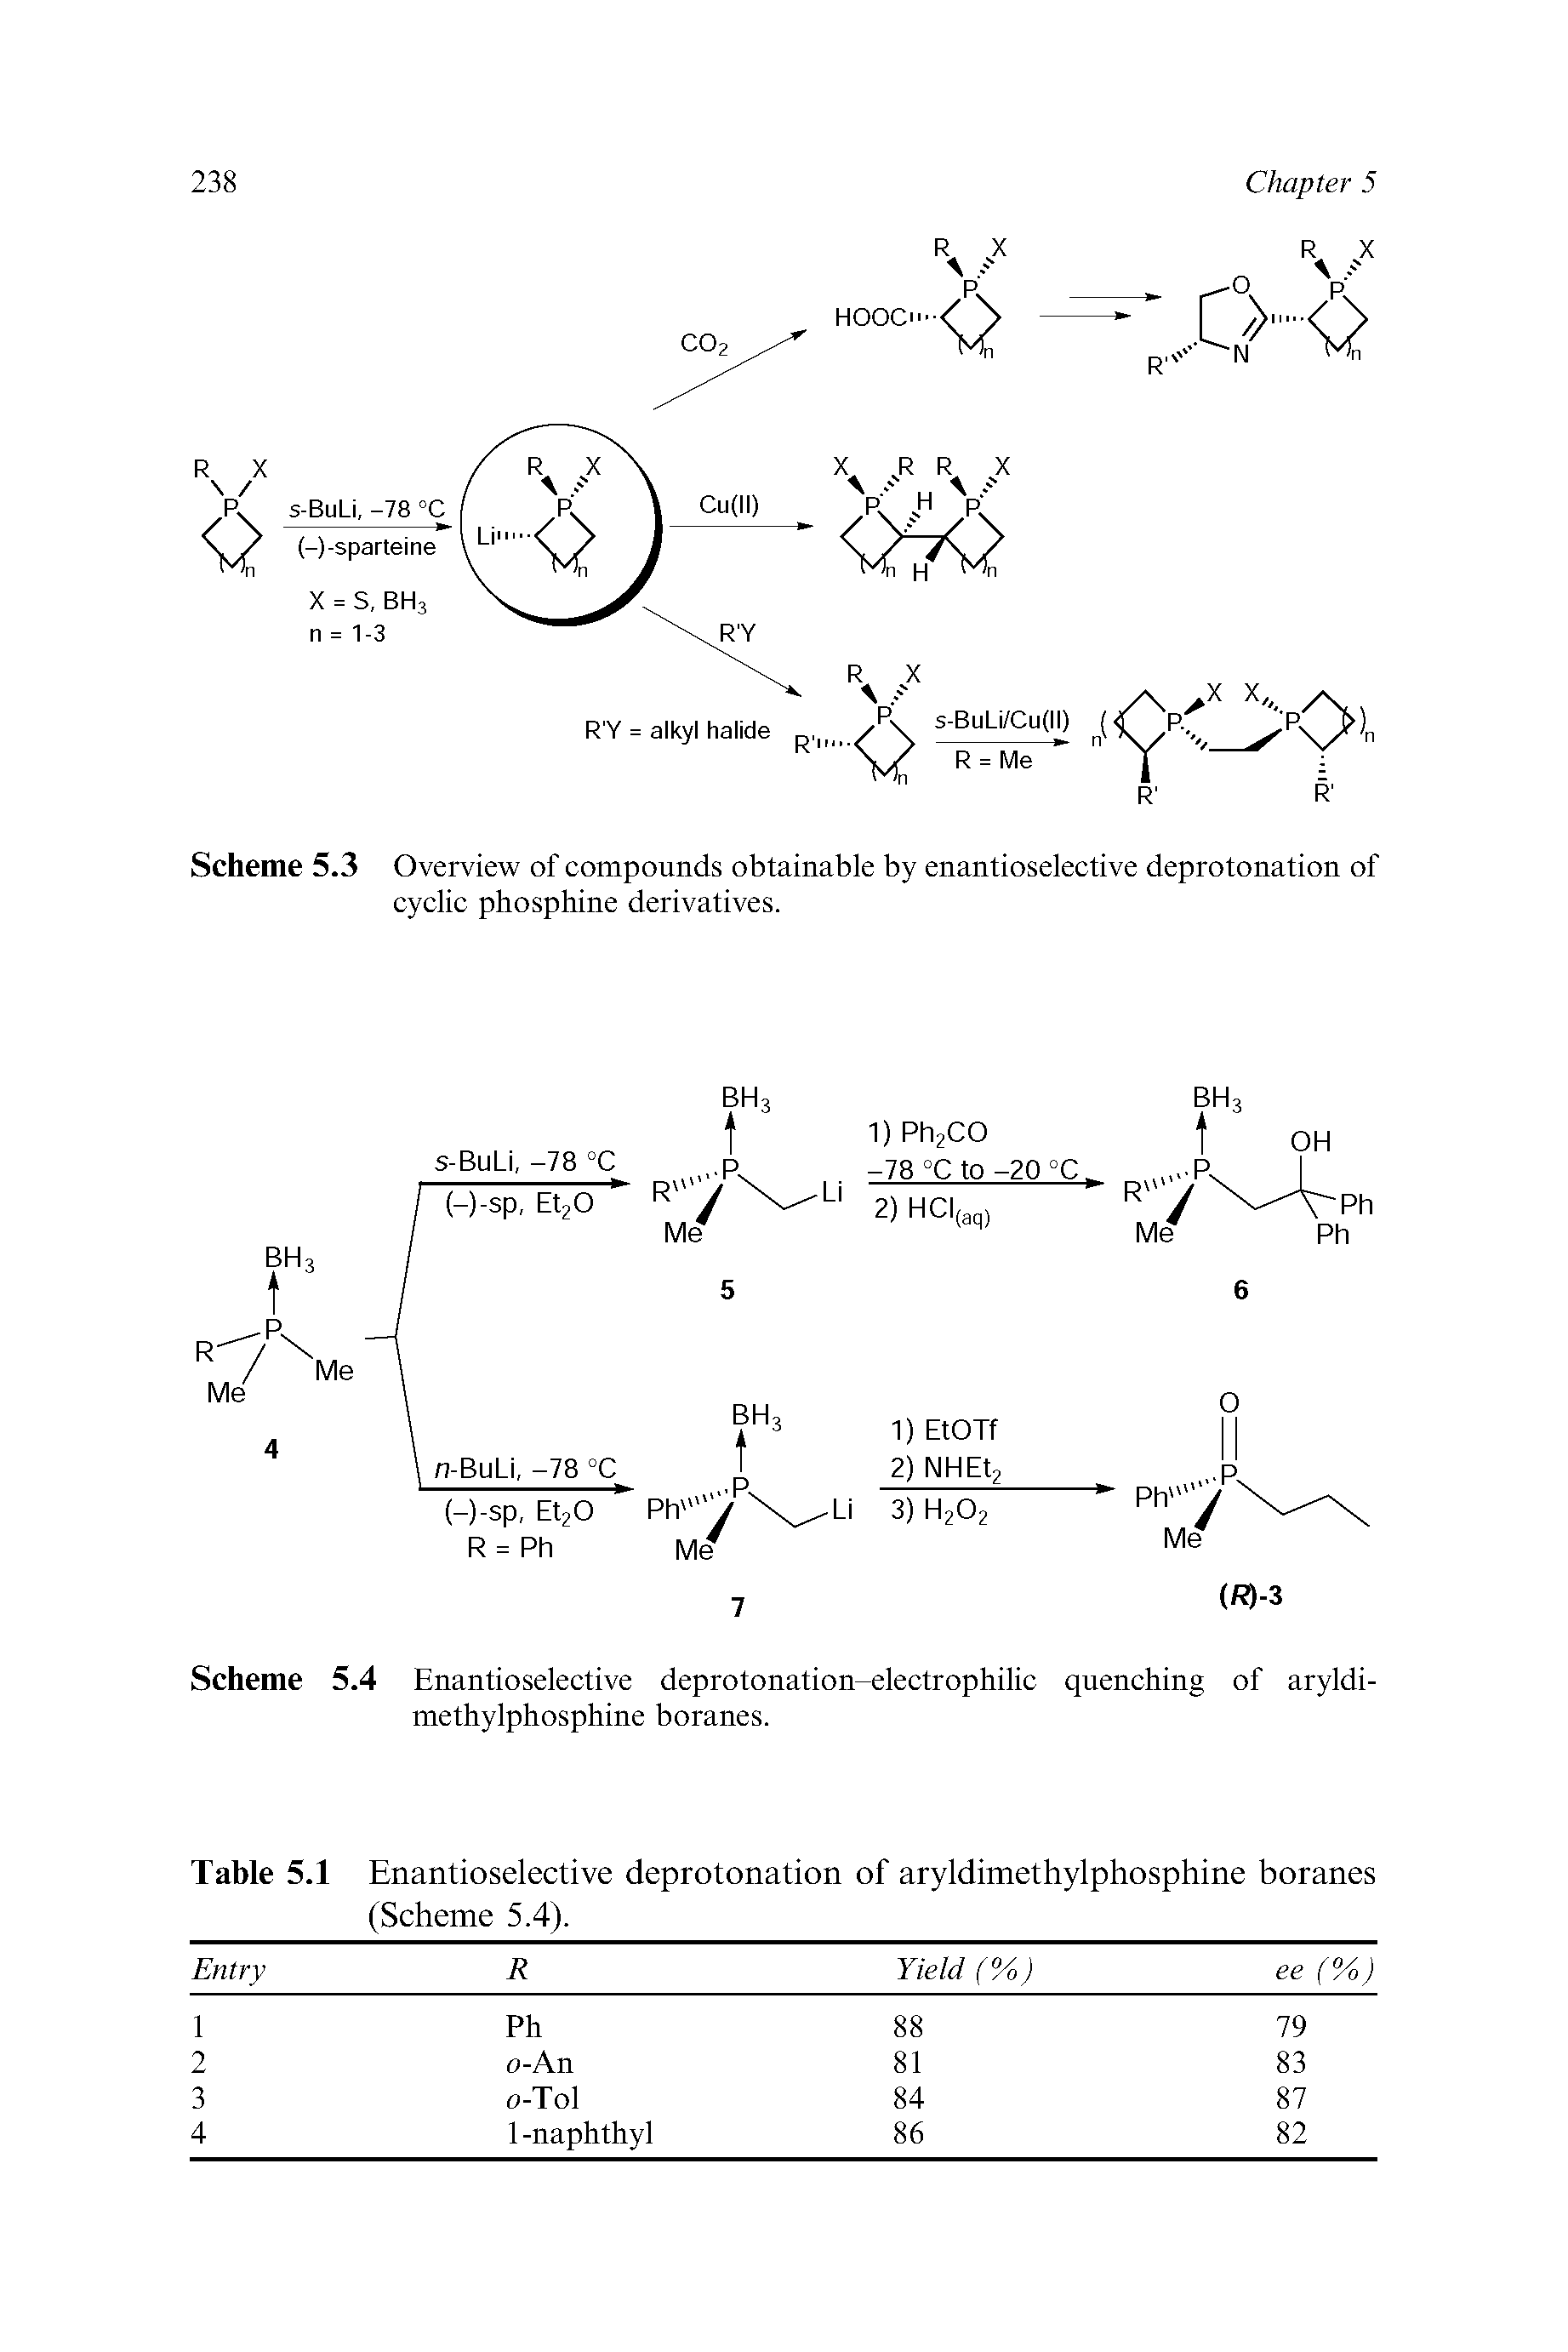 Scheme 5.4 Enantioselective deprotonation-electrophilic quenching of aryldi-methylphosphine boranes.